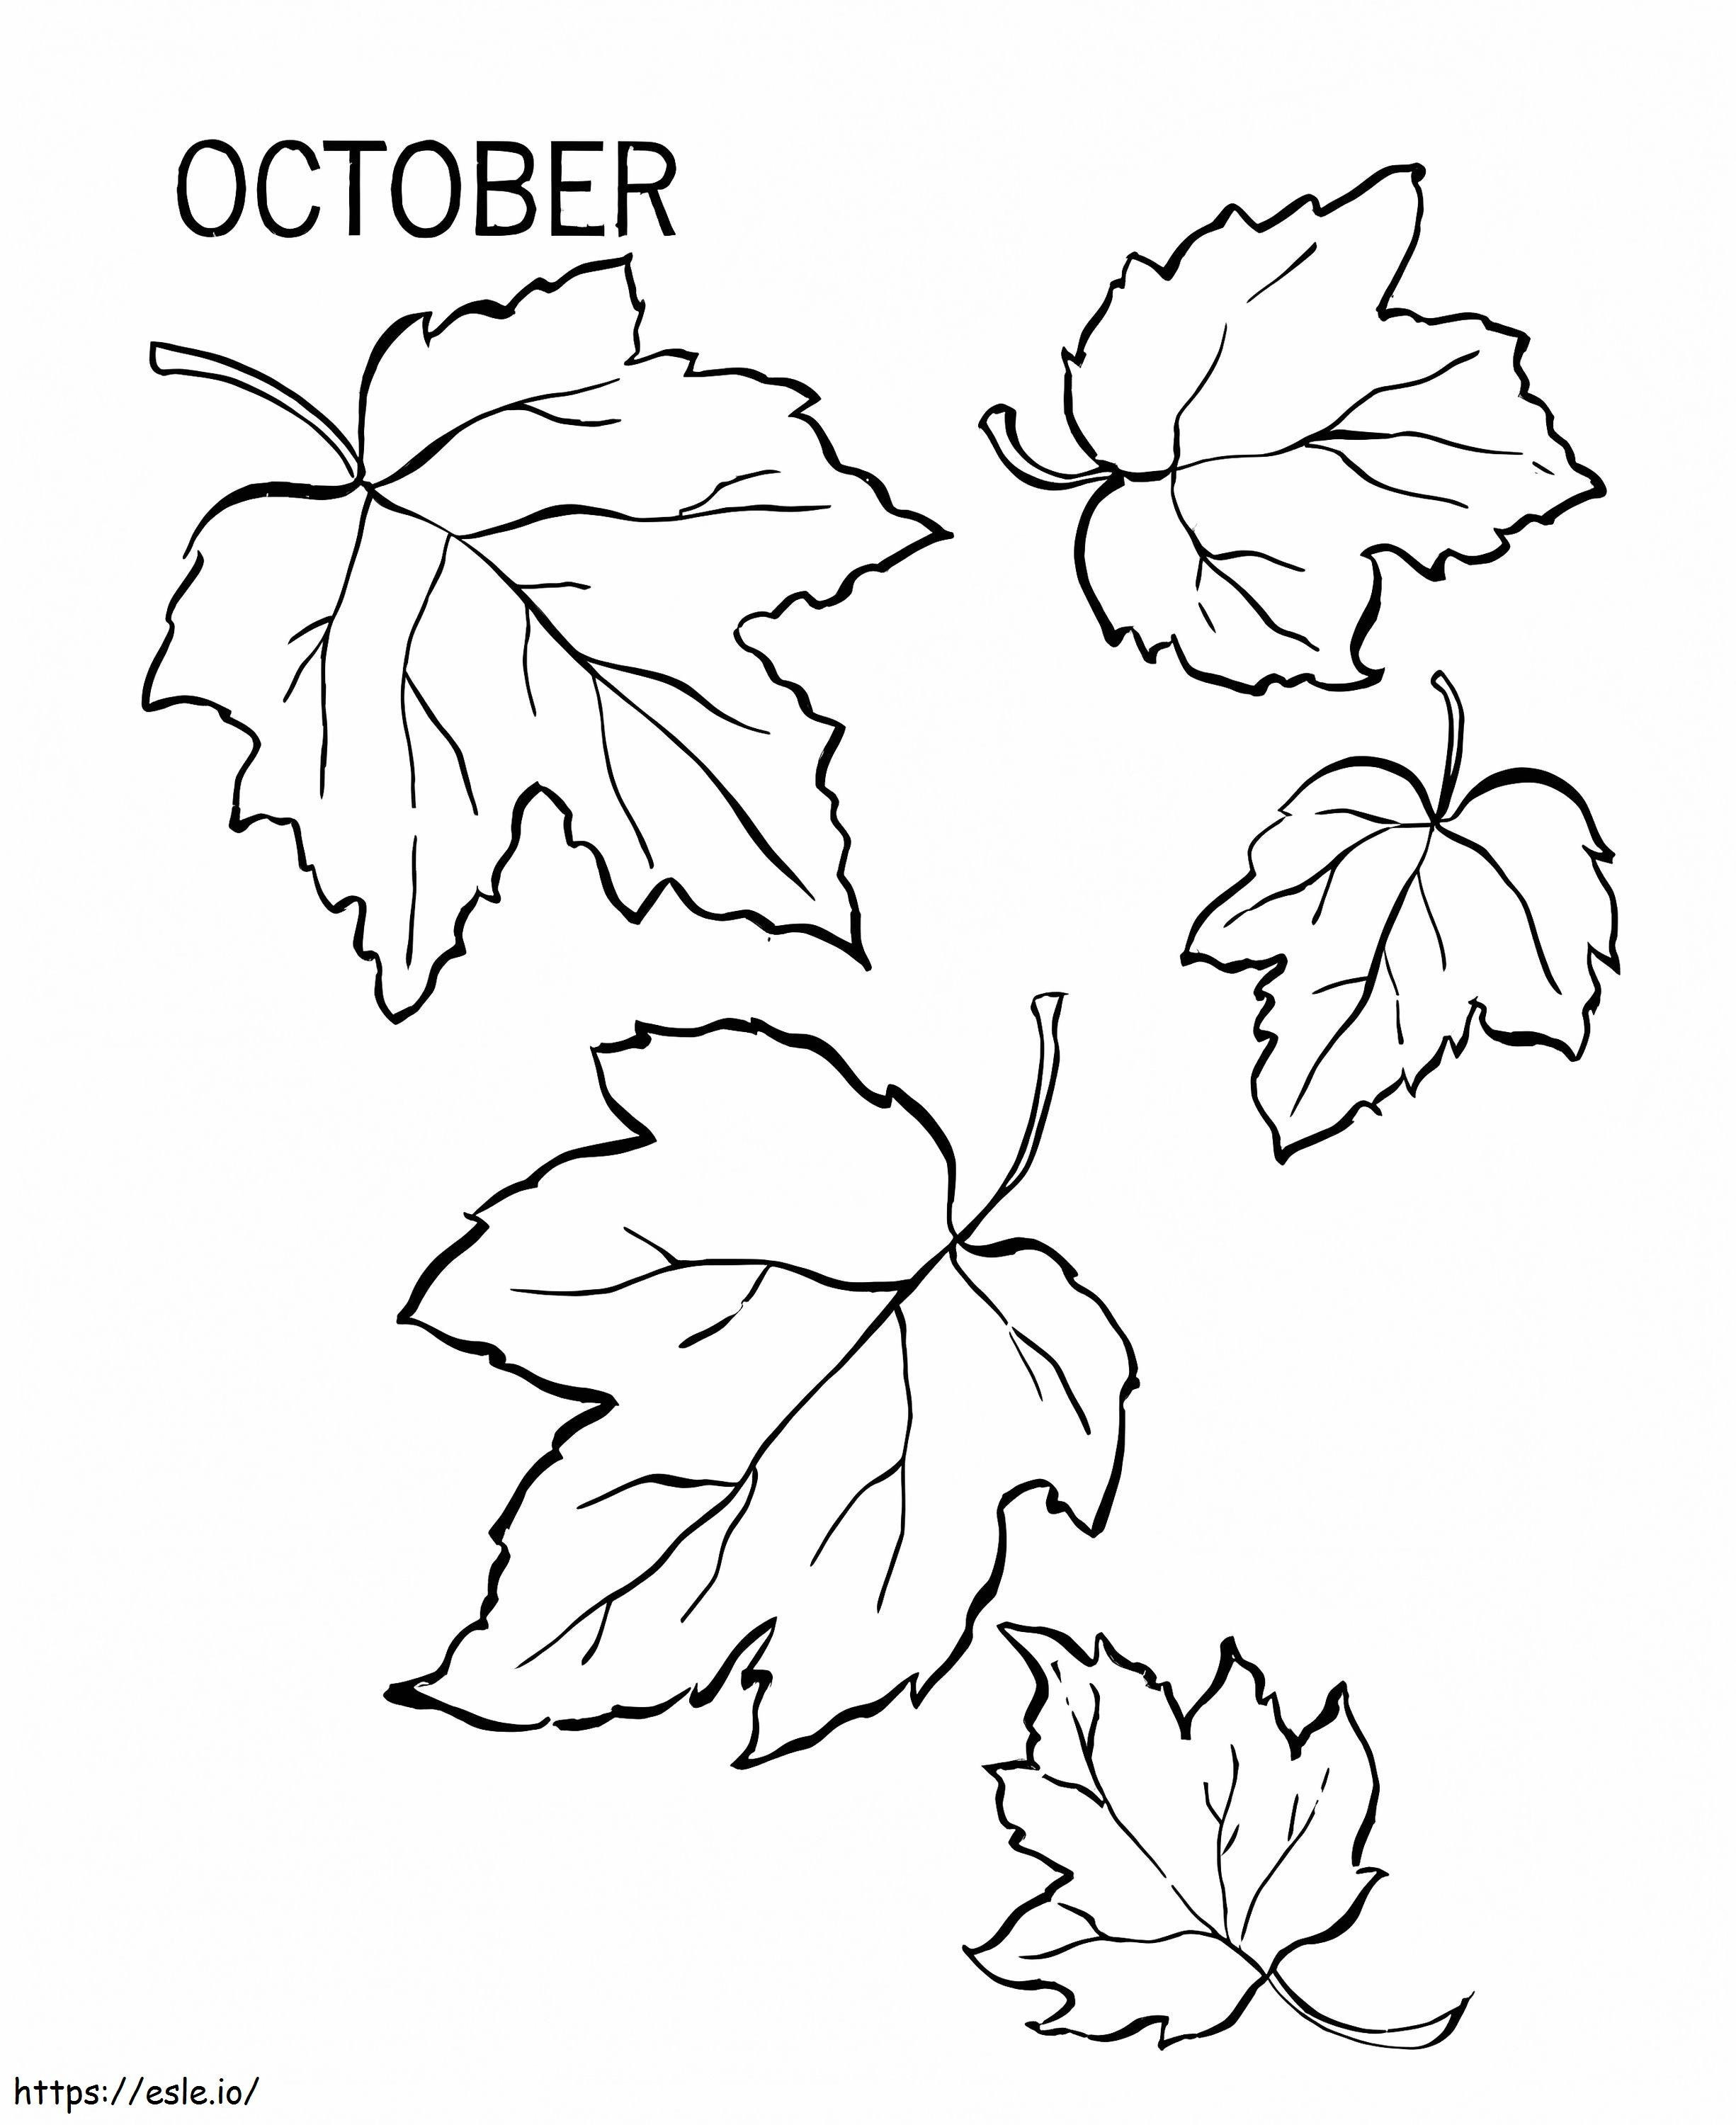 Coloriage Octobre avec des feuilles mortes à imprimer dessin